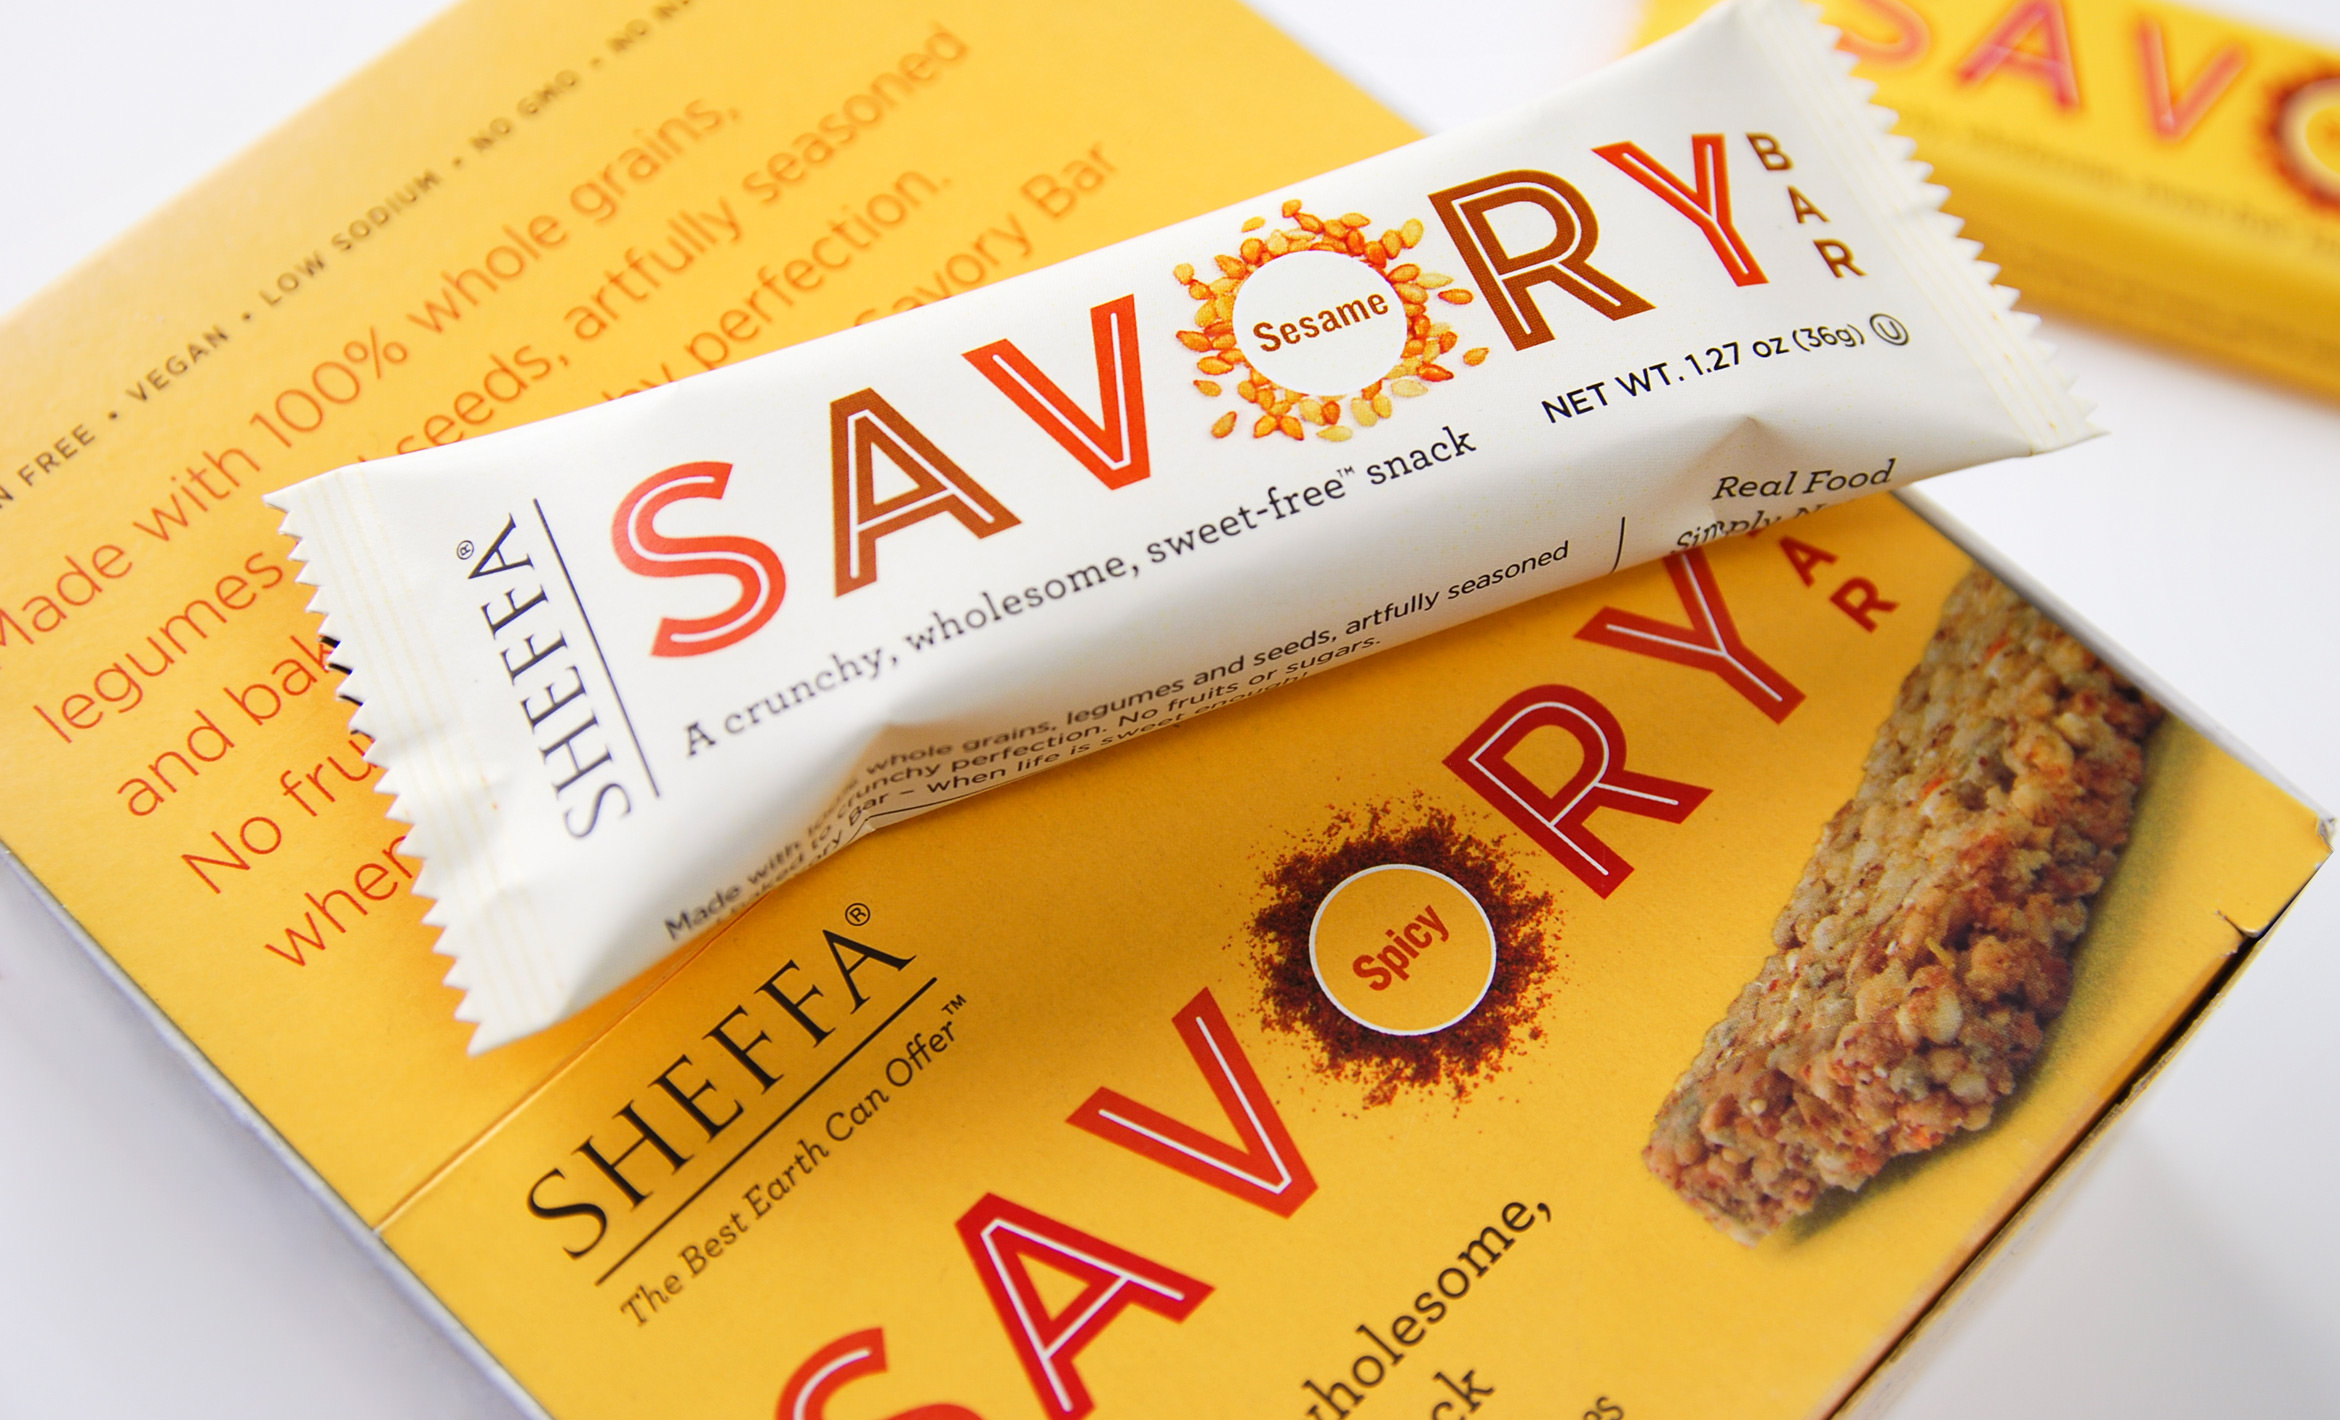 Sheffa Savory Bars Packaging